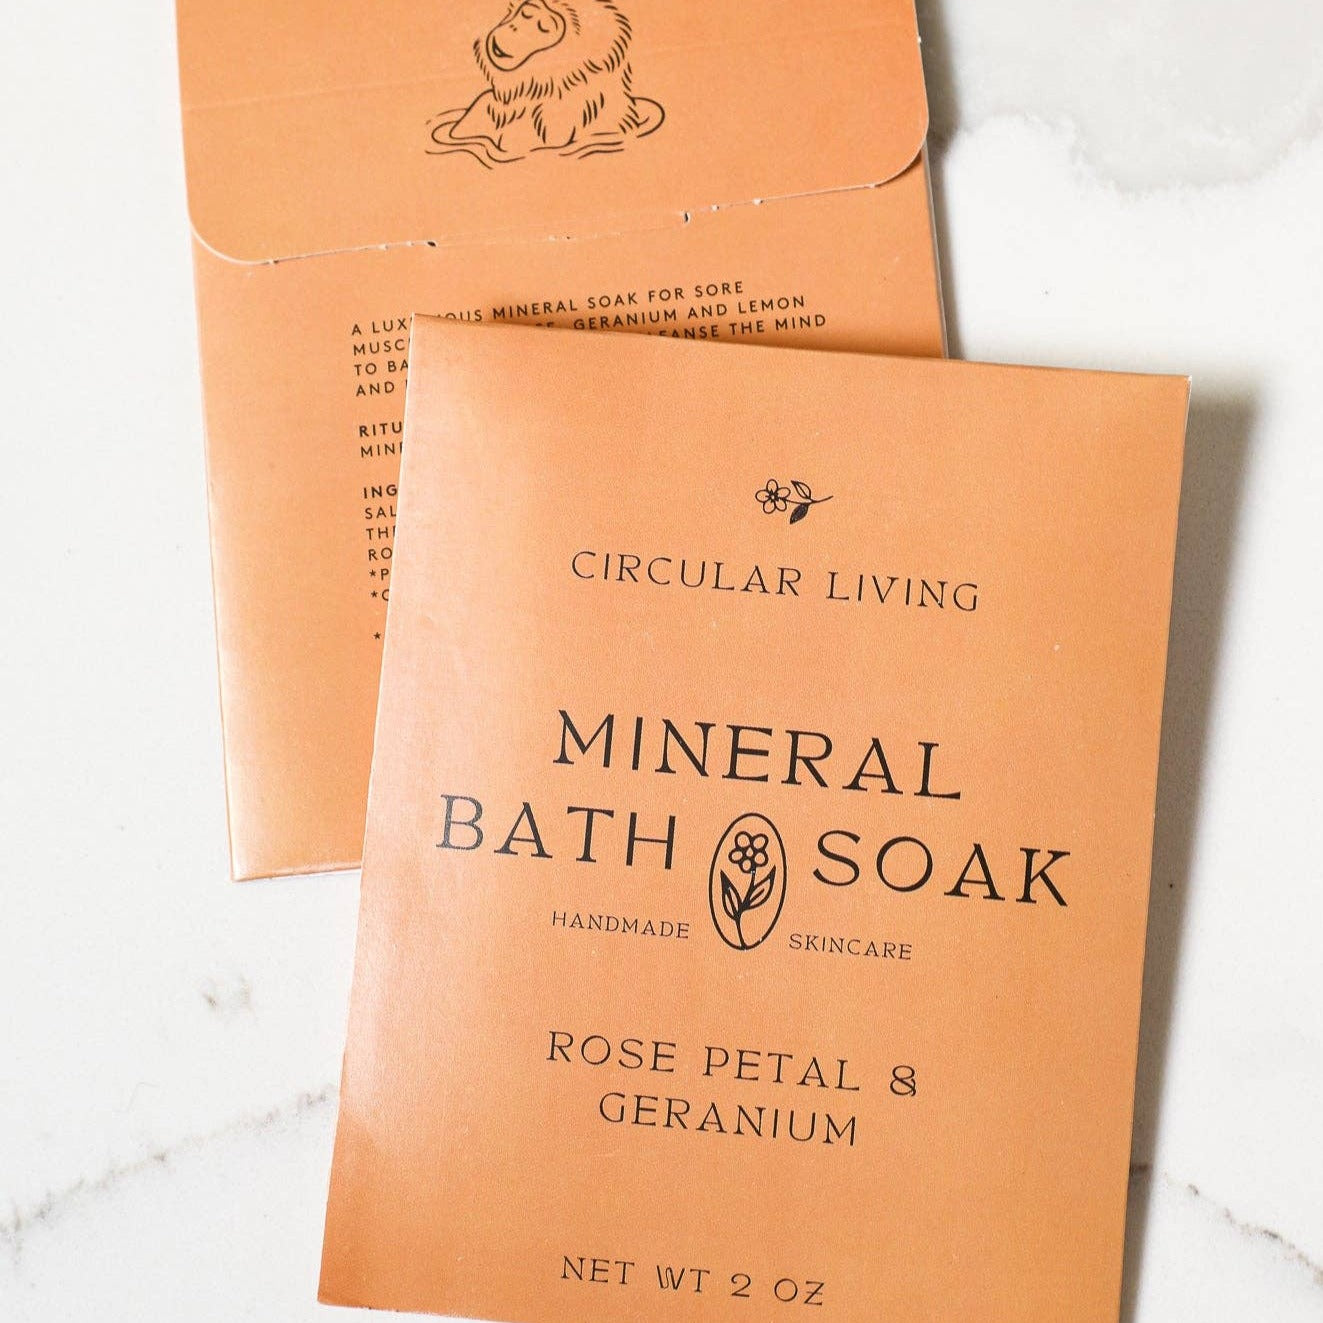 Mineral Bath Soak Sachet, Rose Petal & Geranium